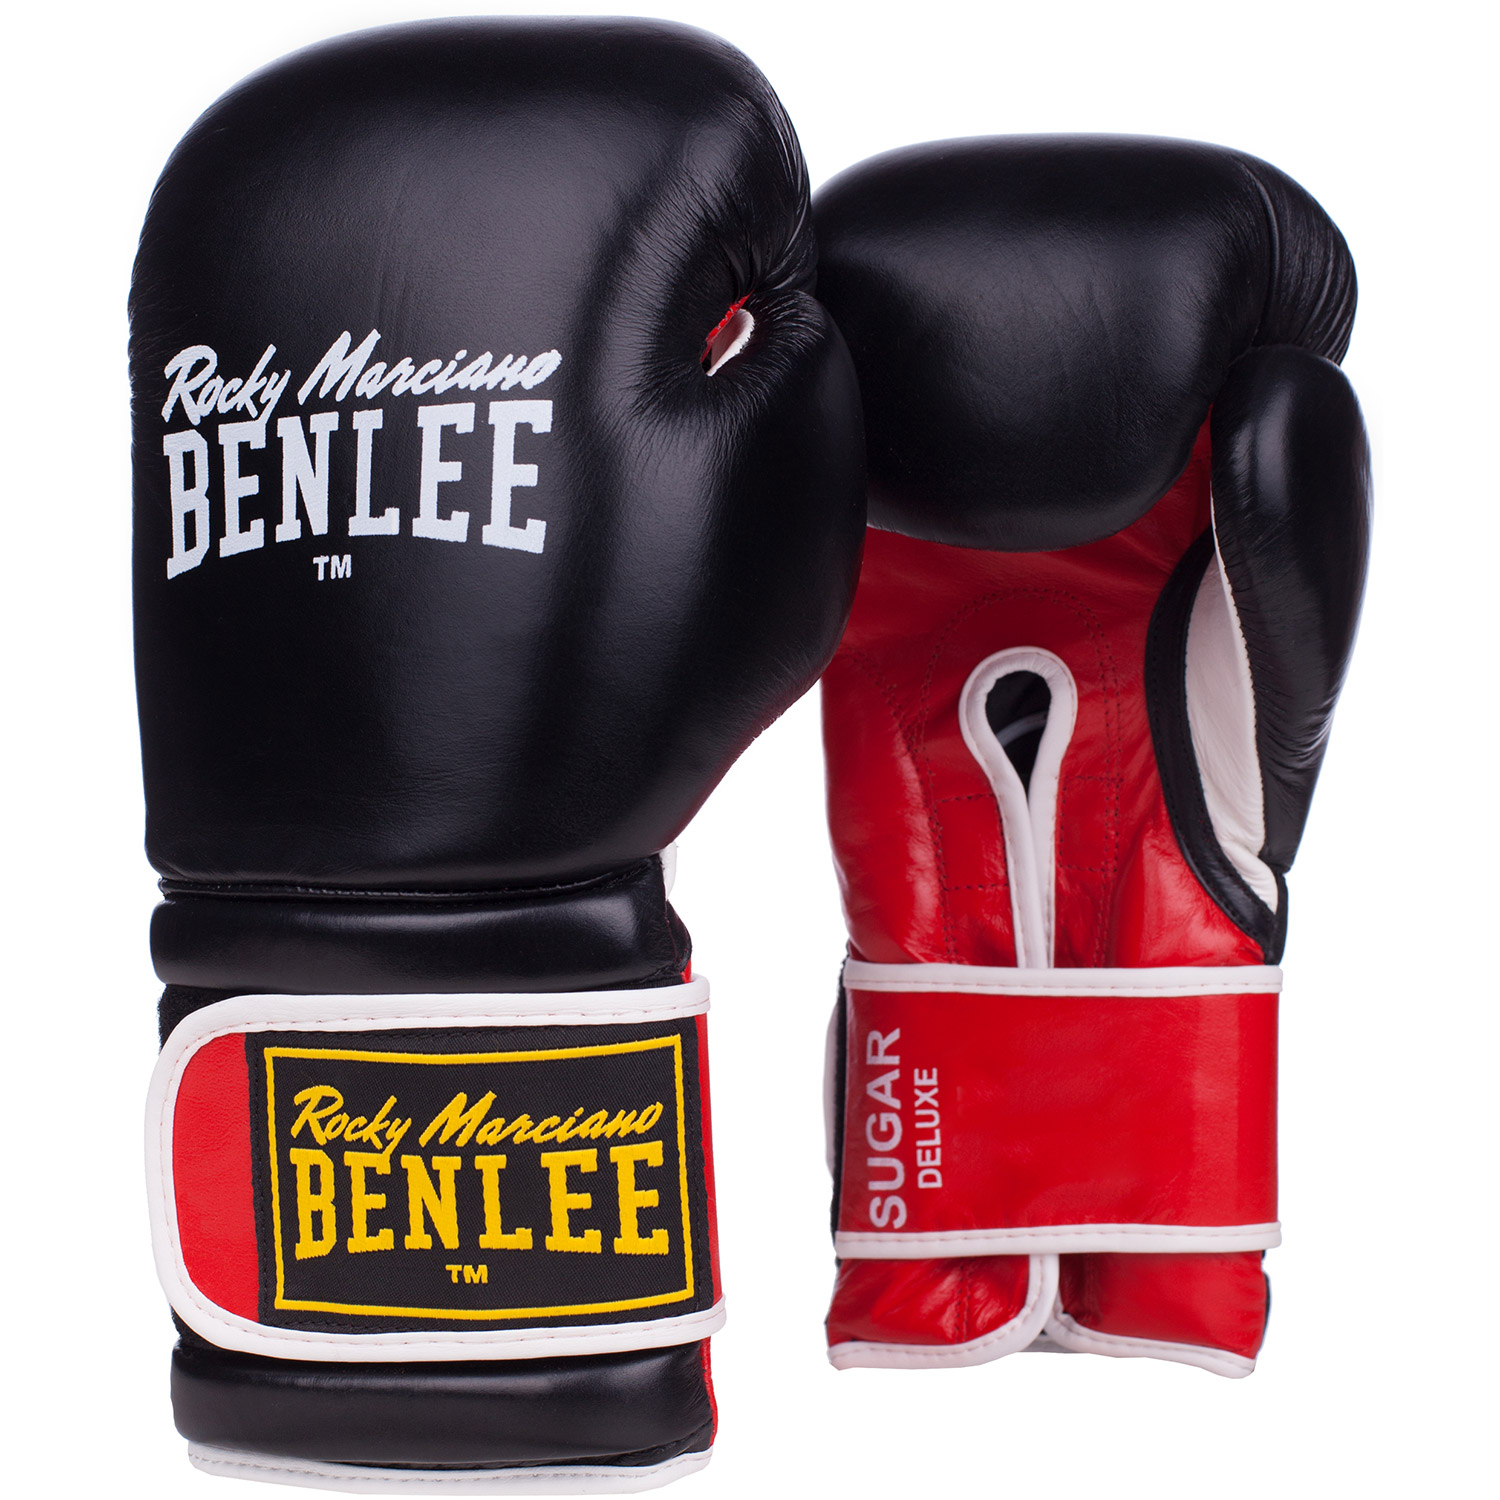 Benlee Sugar Deluxe boxing gloves 14 oz